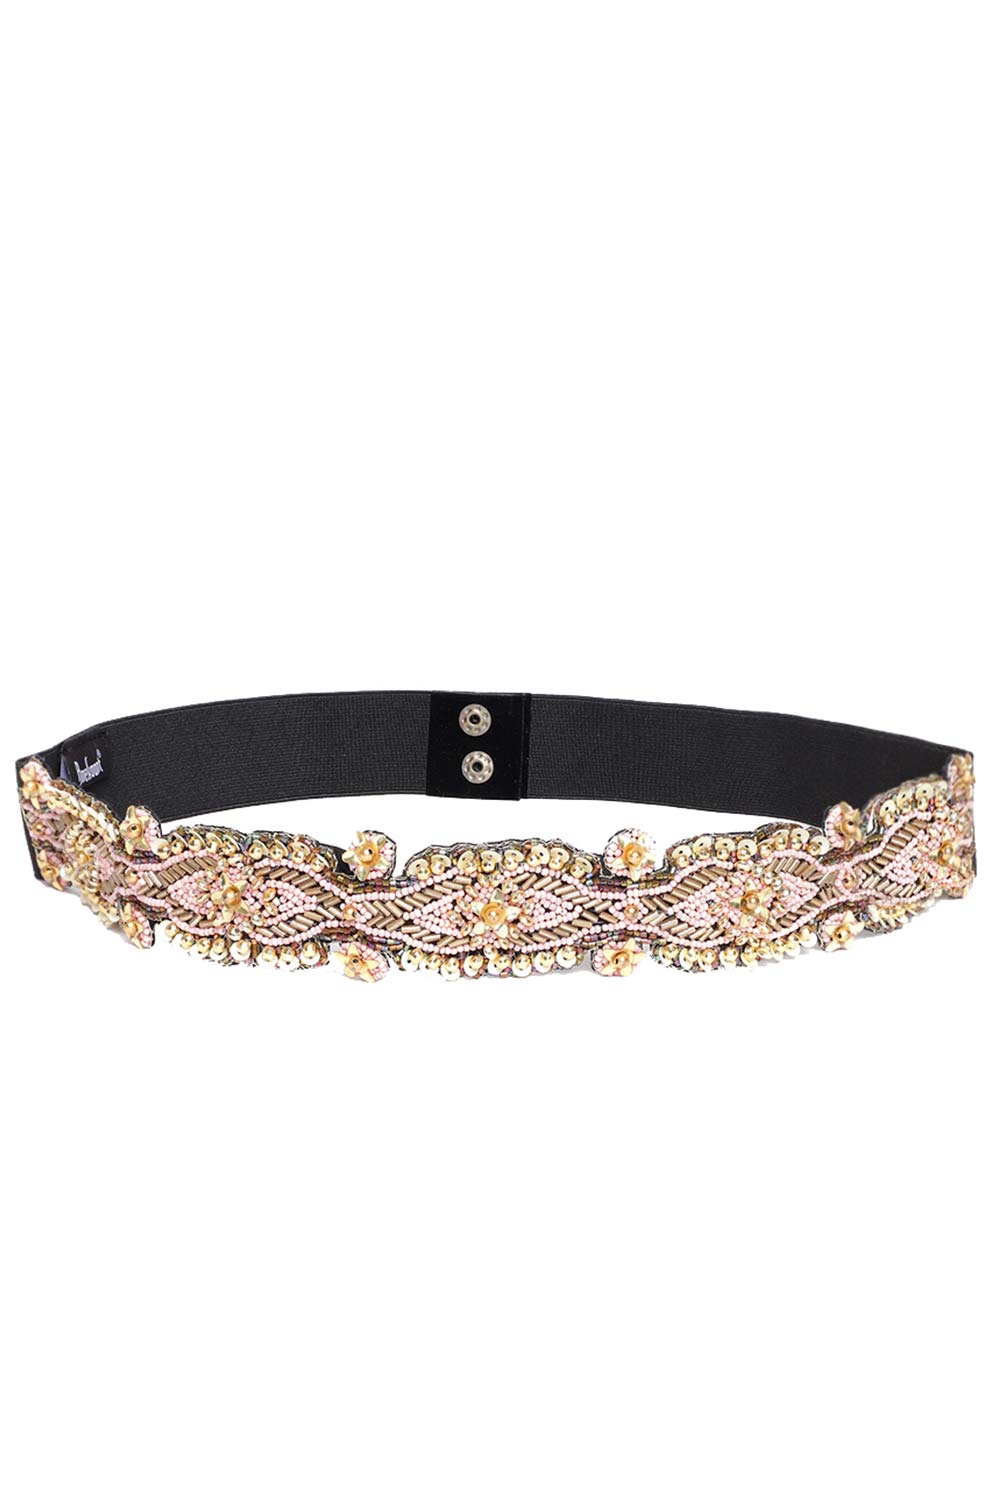 Buy Ogee Bead Work Waist Belt in Pink & Gold Online